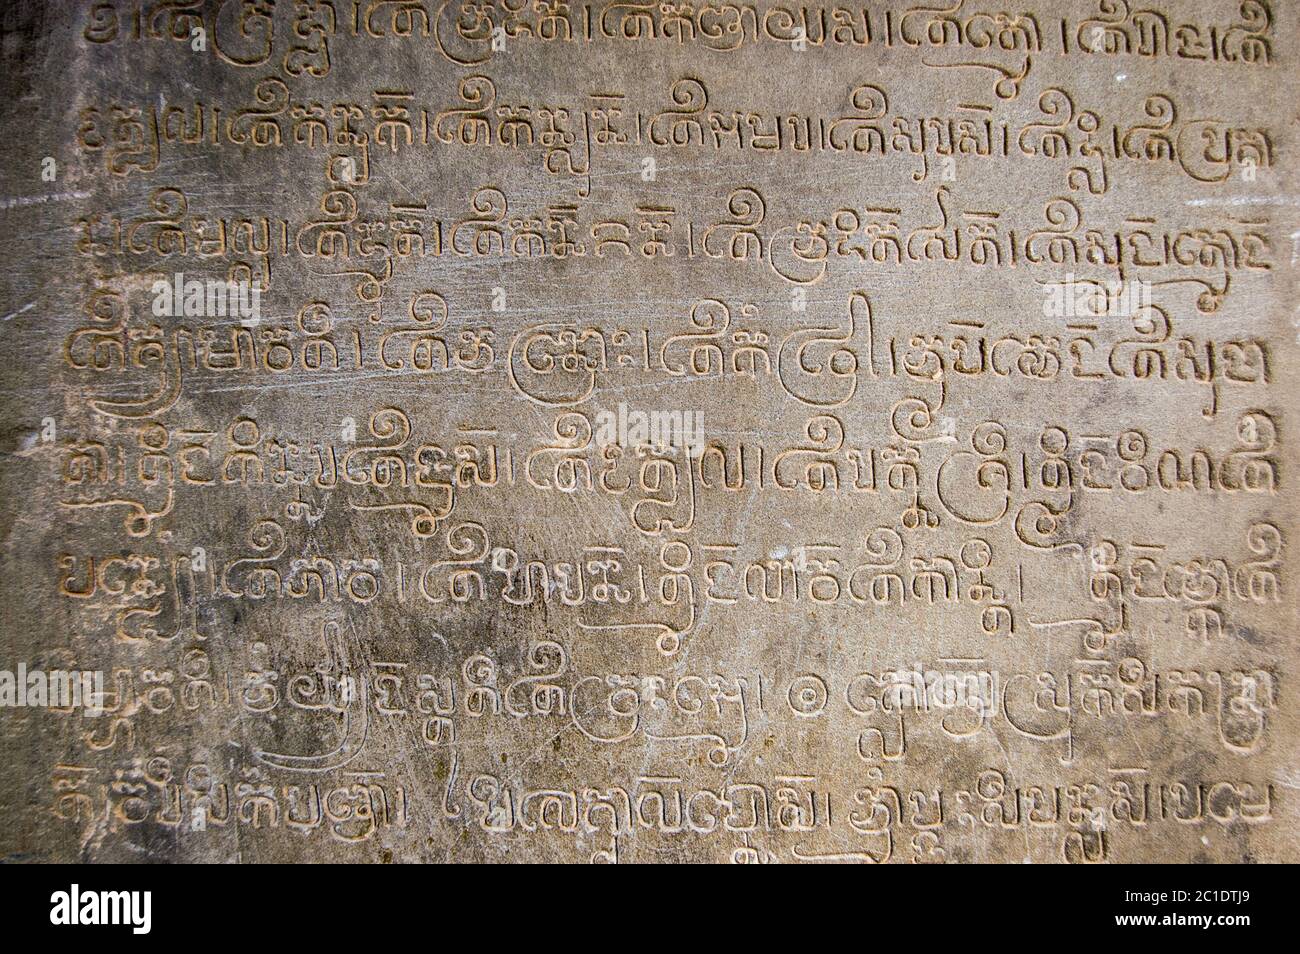 Sanskrit Religiöse Inschriften am Eingang zu einem prasat des Lolei Tempels, Teil des Rolous Komplexes in Angkor, Siem Reap, Kambodscha. Geschnitzt in der Stockfoto